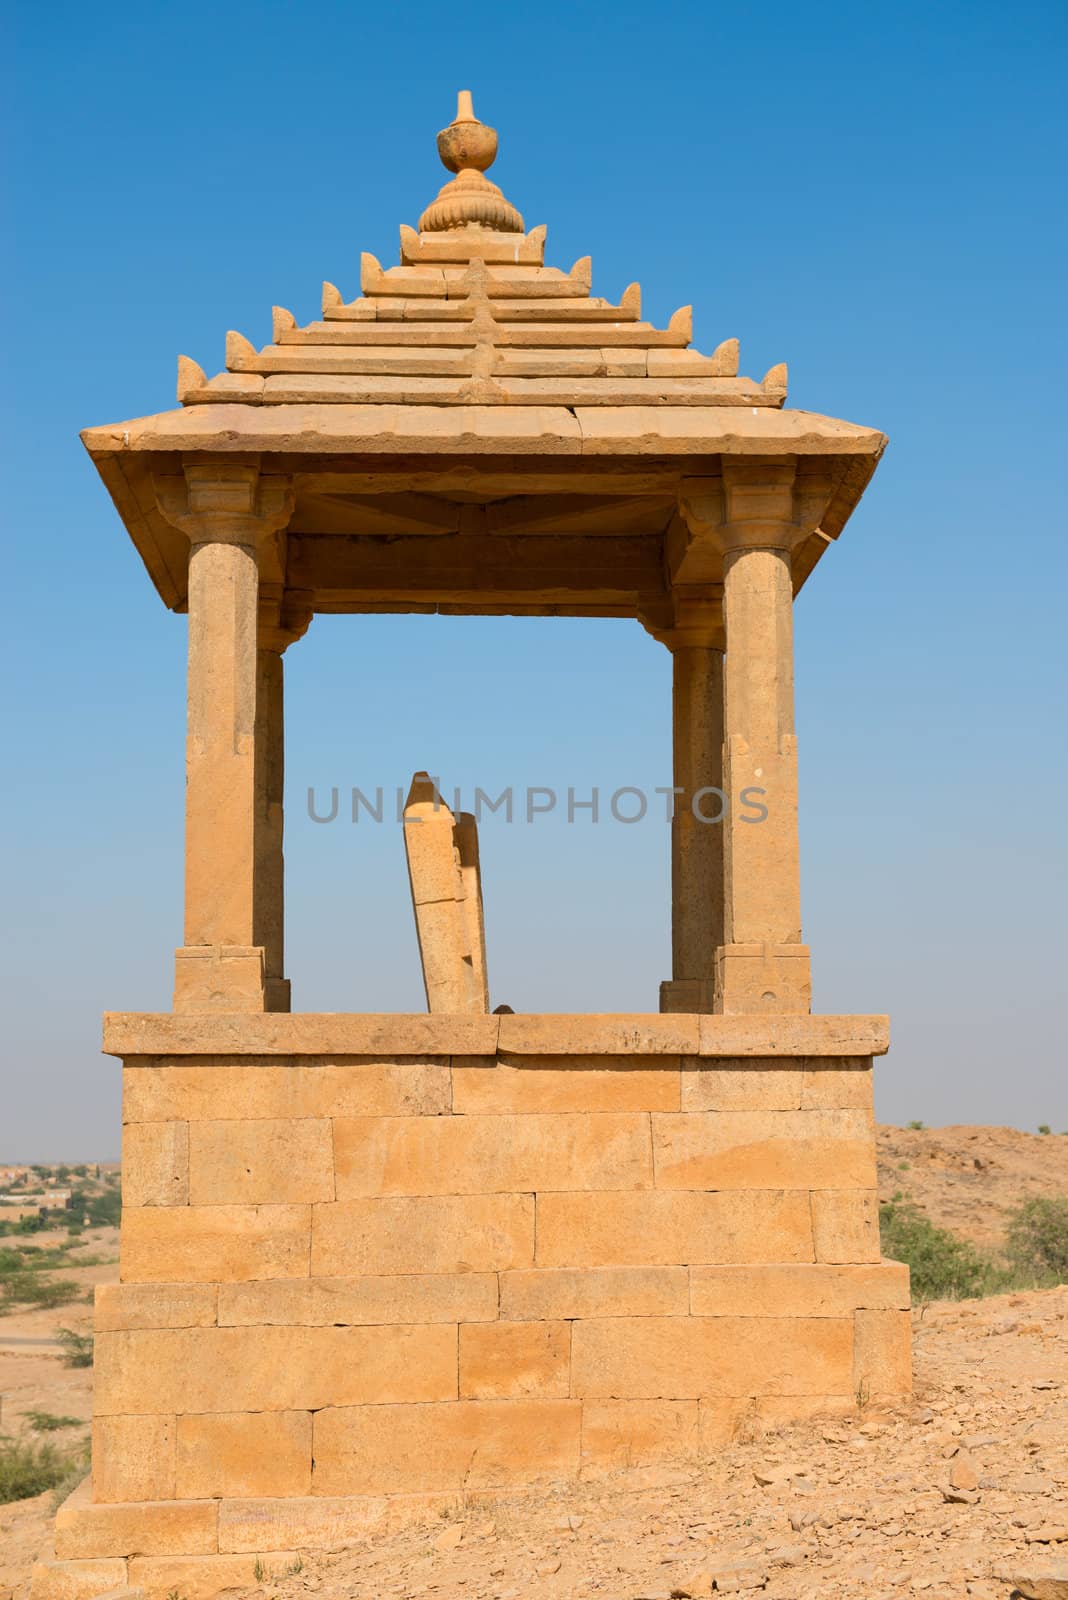 Royal cenotaphs of ancient Maharajas rulers in Bada Bagh, also called Barabagh (literally Big Garden), Jaisalmer, India